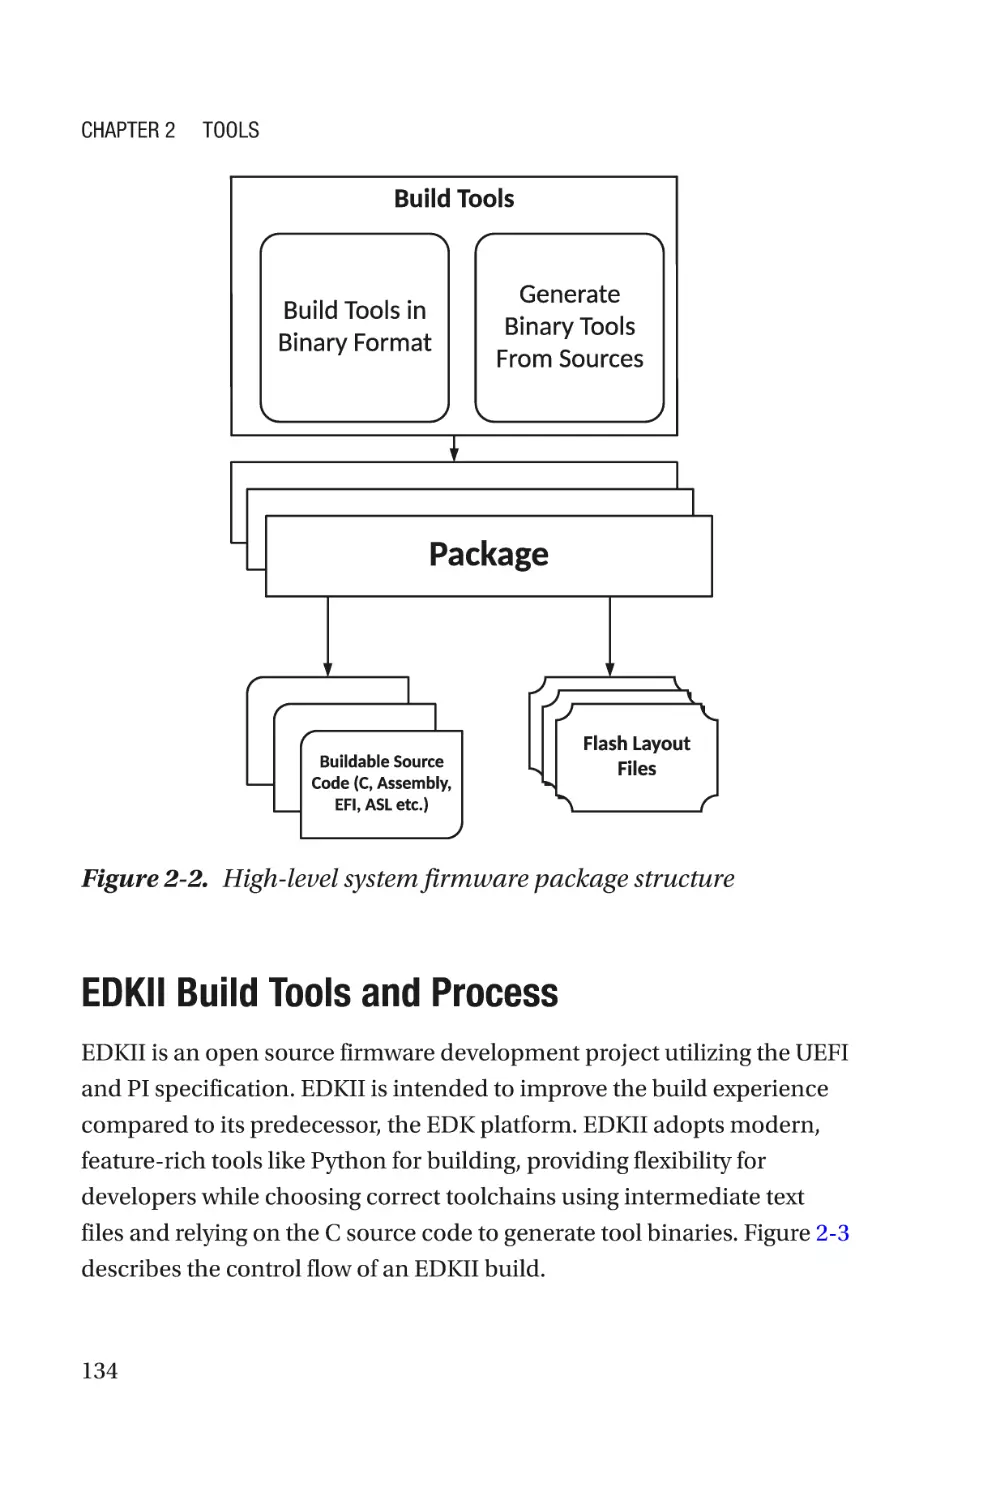 EDKII Build Tools and Process